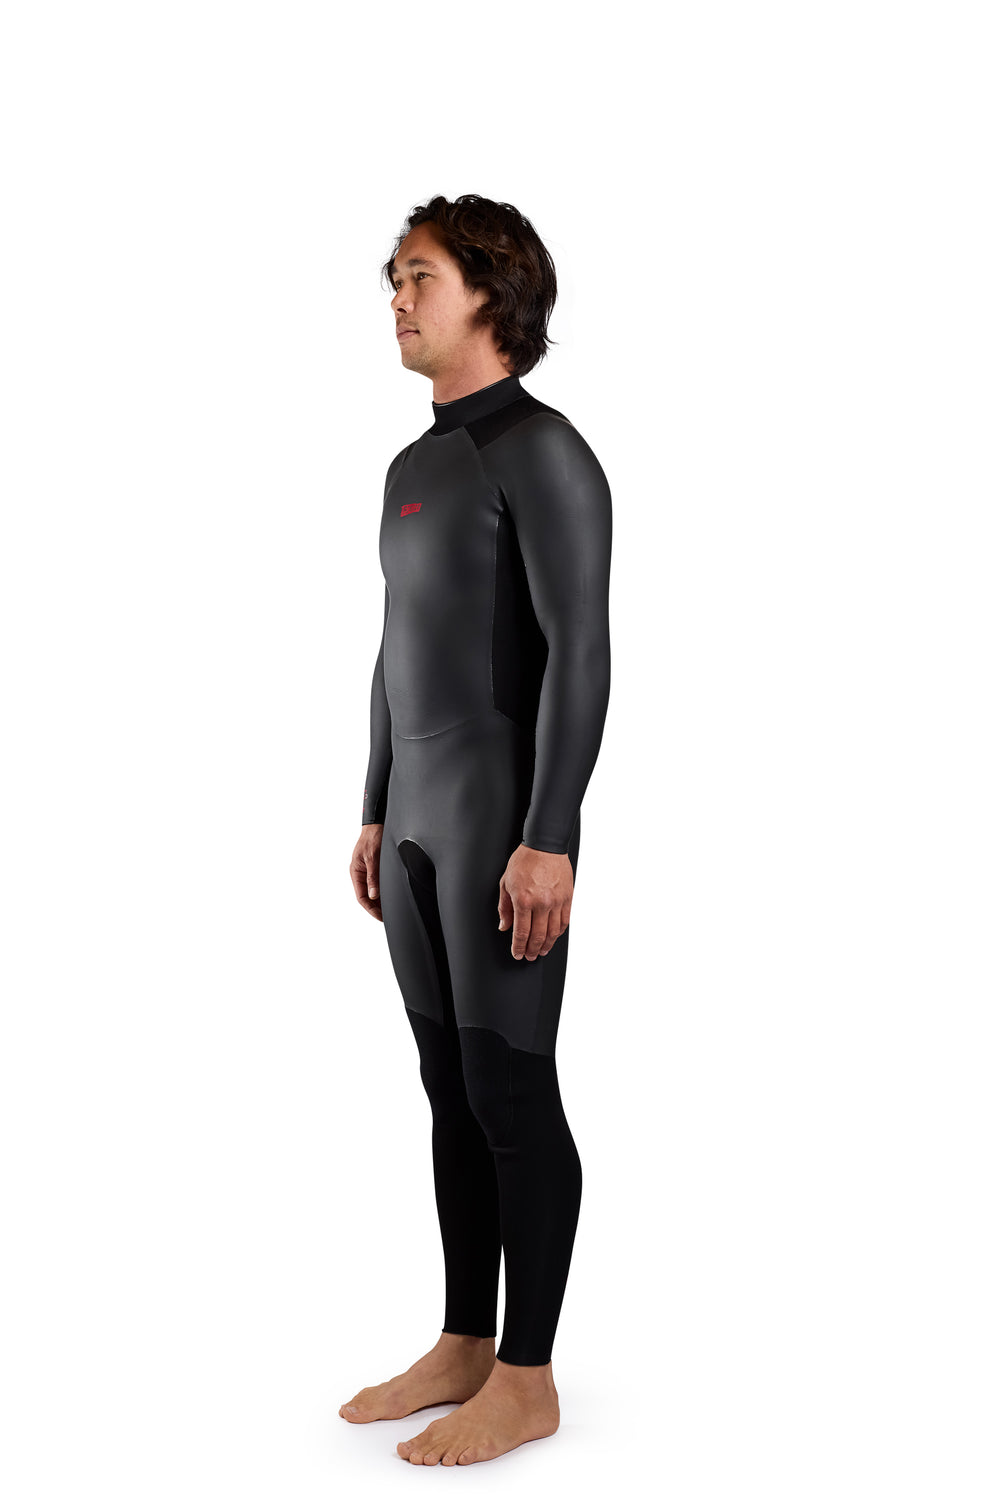 Adelio Taylor Long Arm Zipperless Spring Wetsuit – Adelio Wetsuits